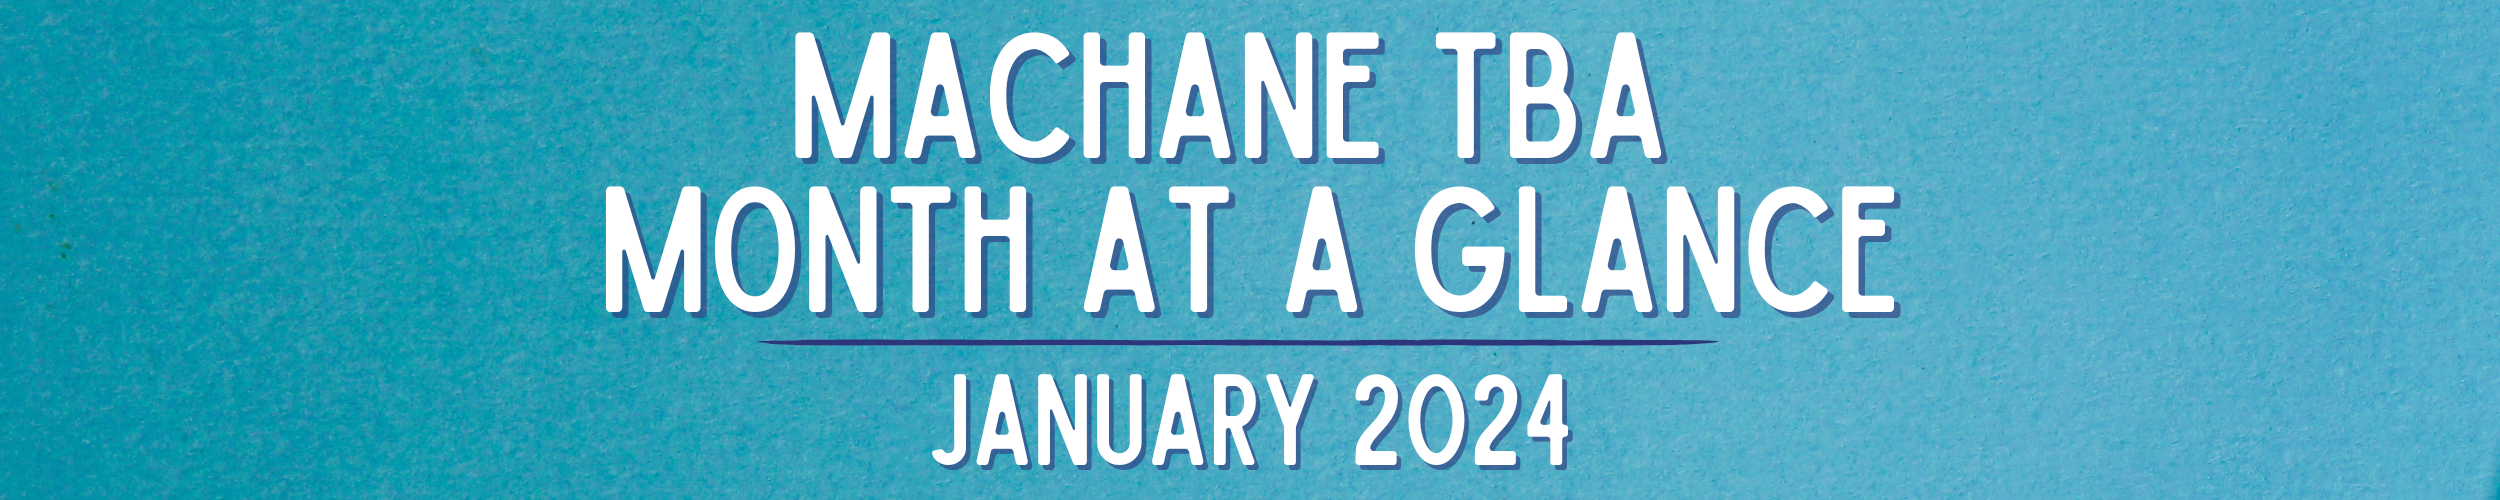 Machane TBA Month at a Glance - January 2024